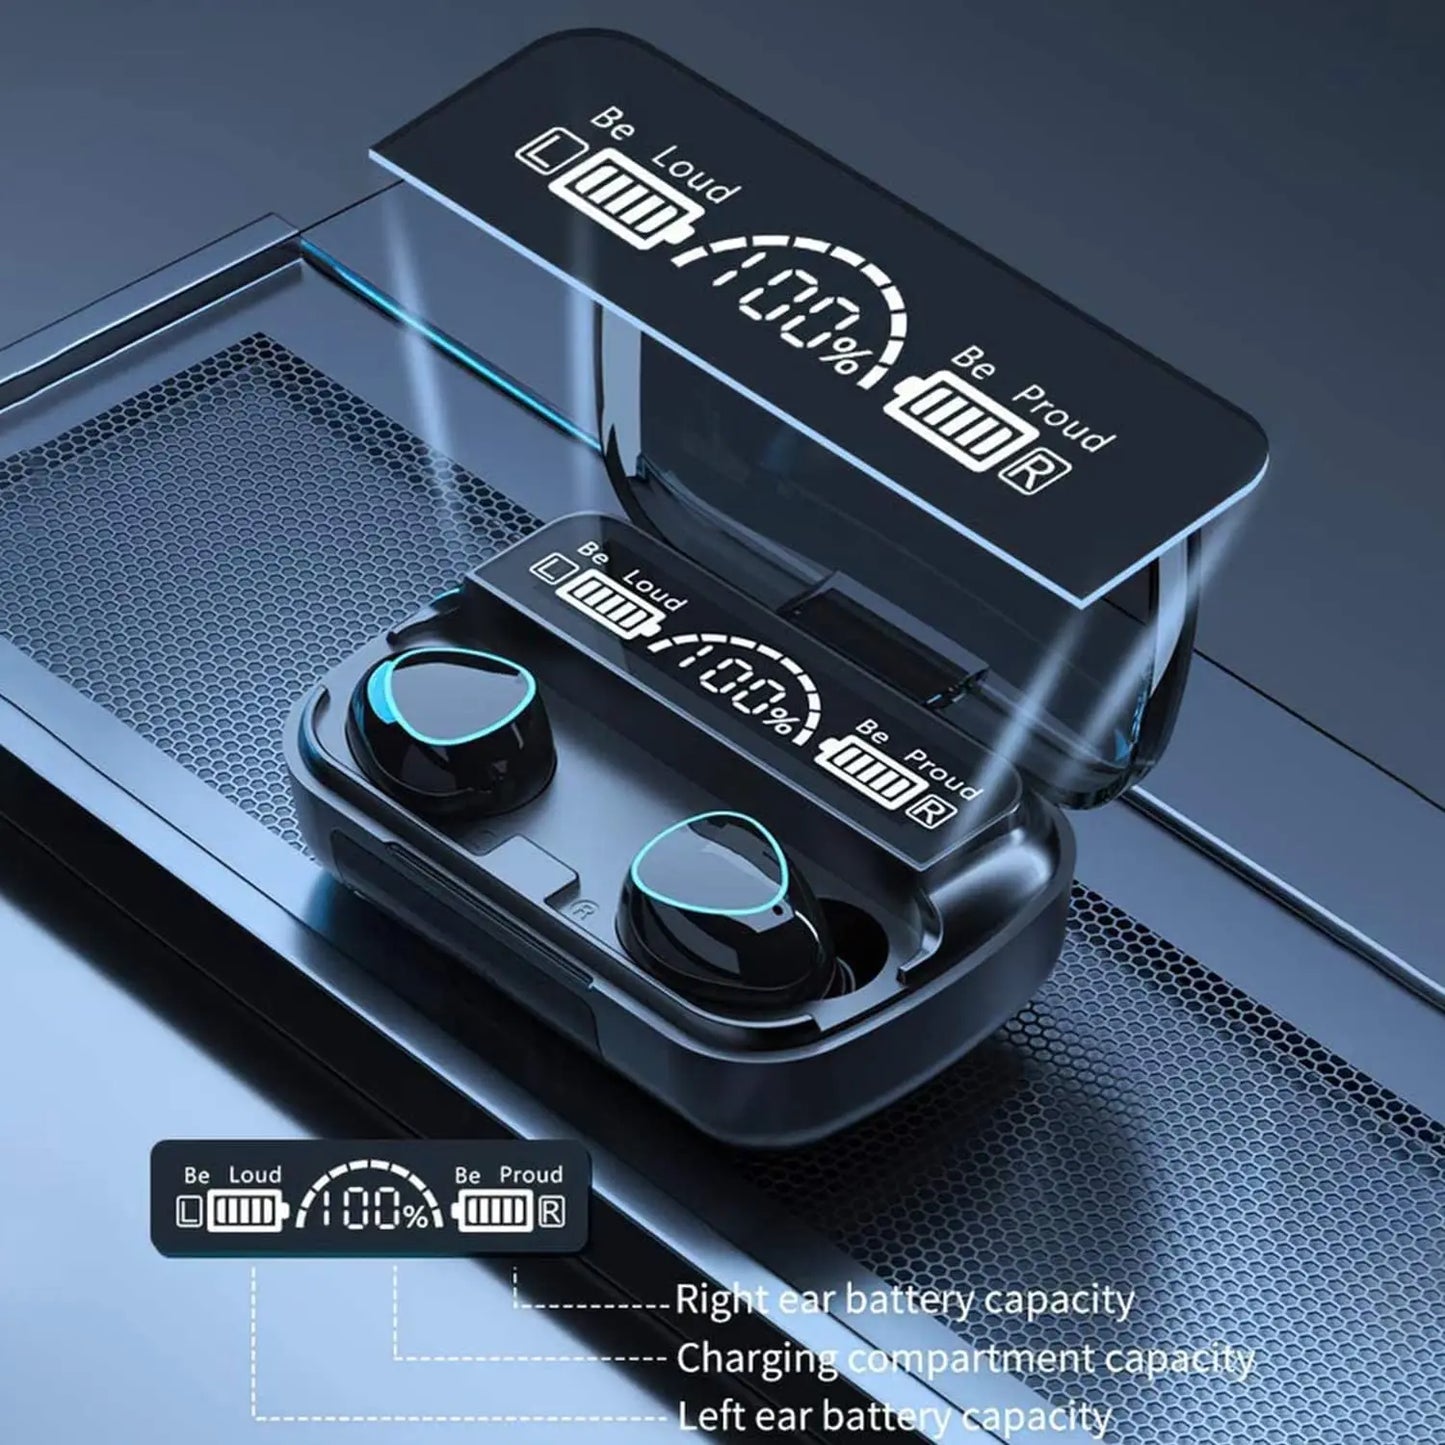 TWS M10 Wireless Bluetooth Headphones LED Display 3500mah Charging Box 9D Stereo In-Ear Sports Waterproof Bluetooth 5.1 Headset